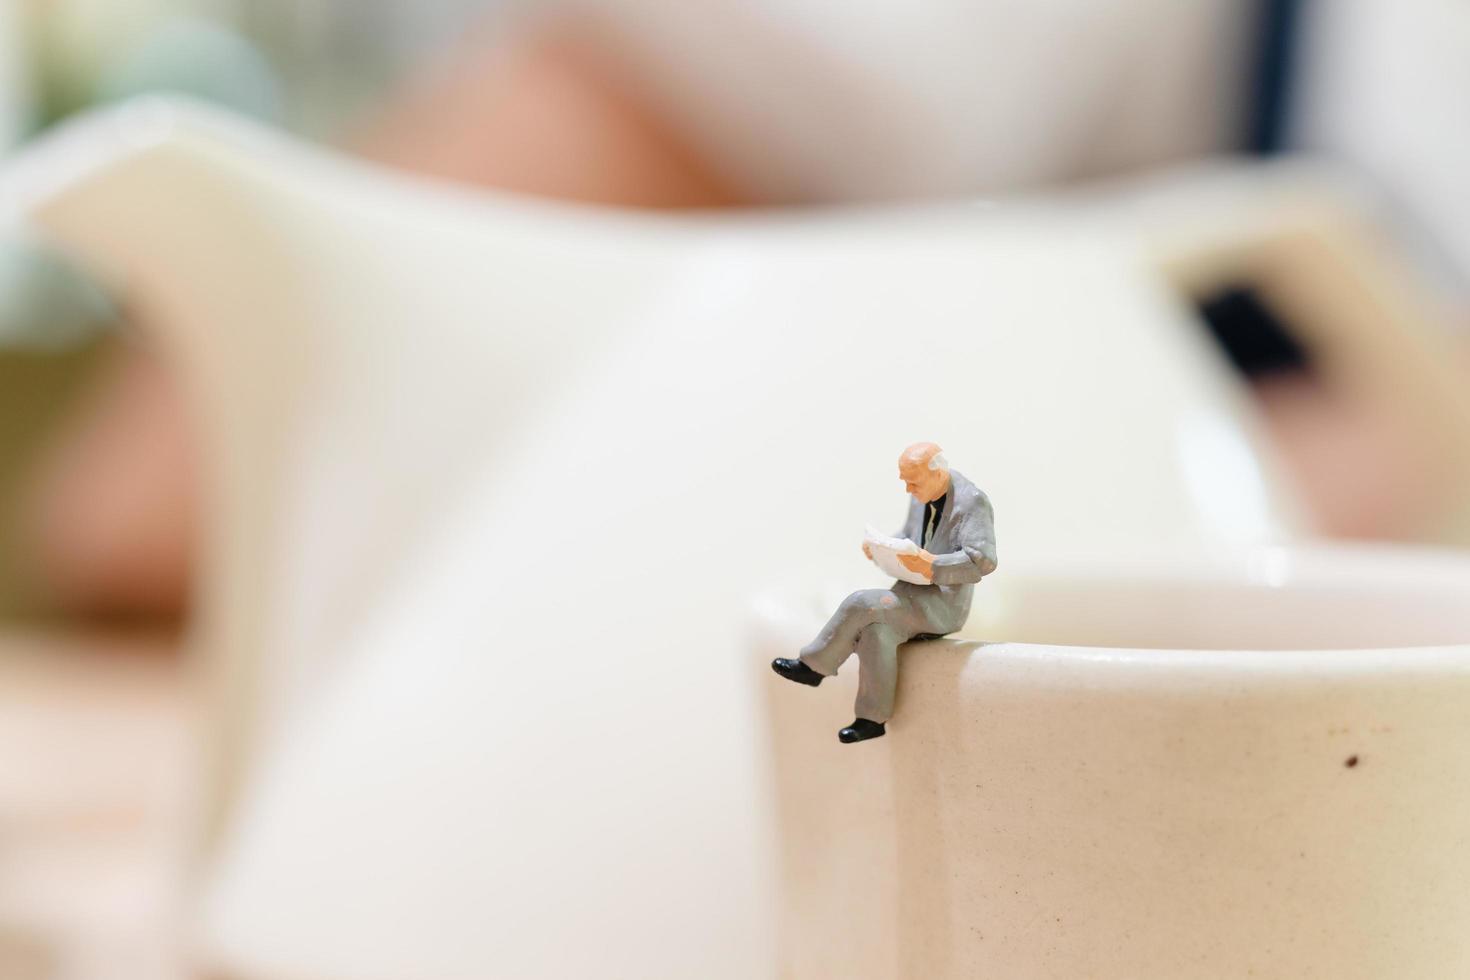 Miniature businessman sitting on a teacup photo